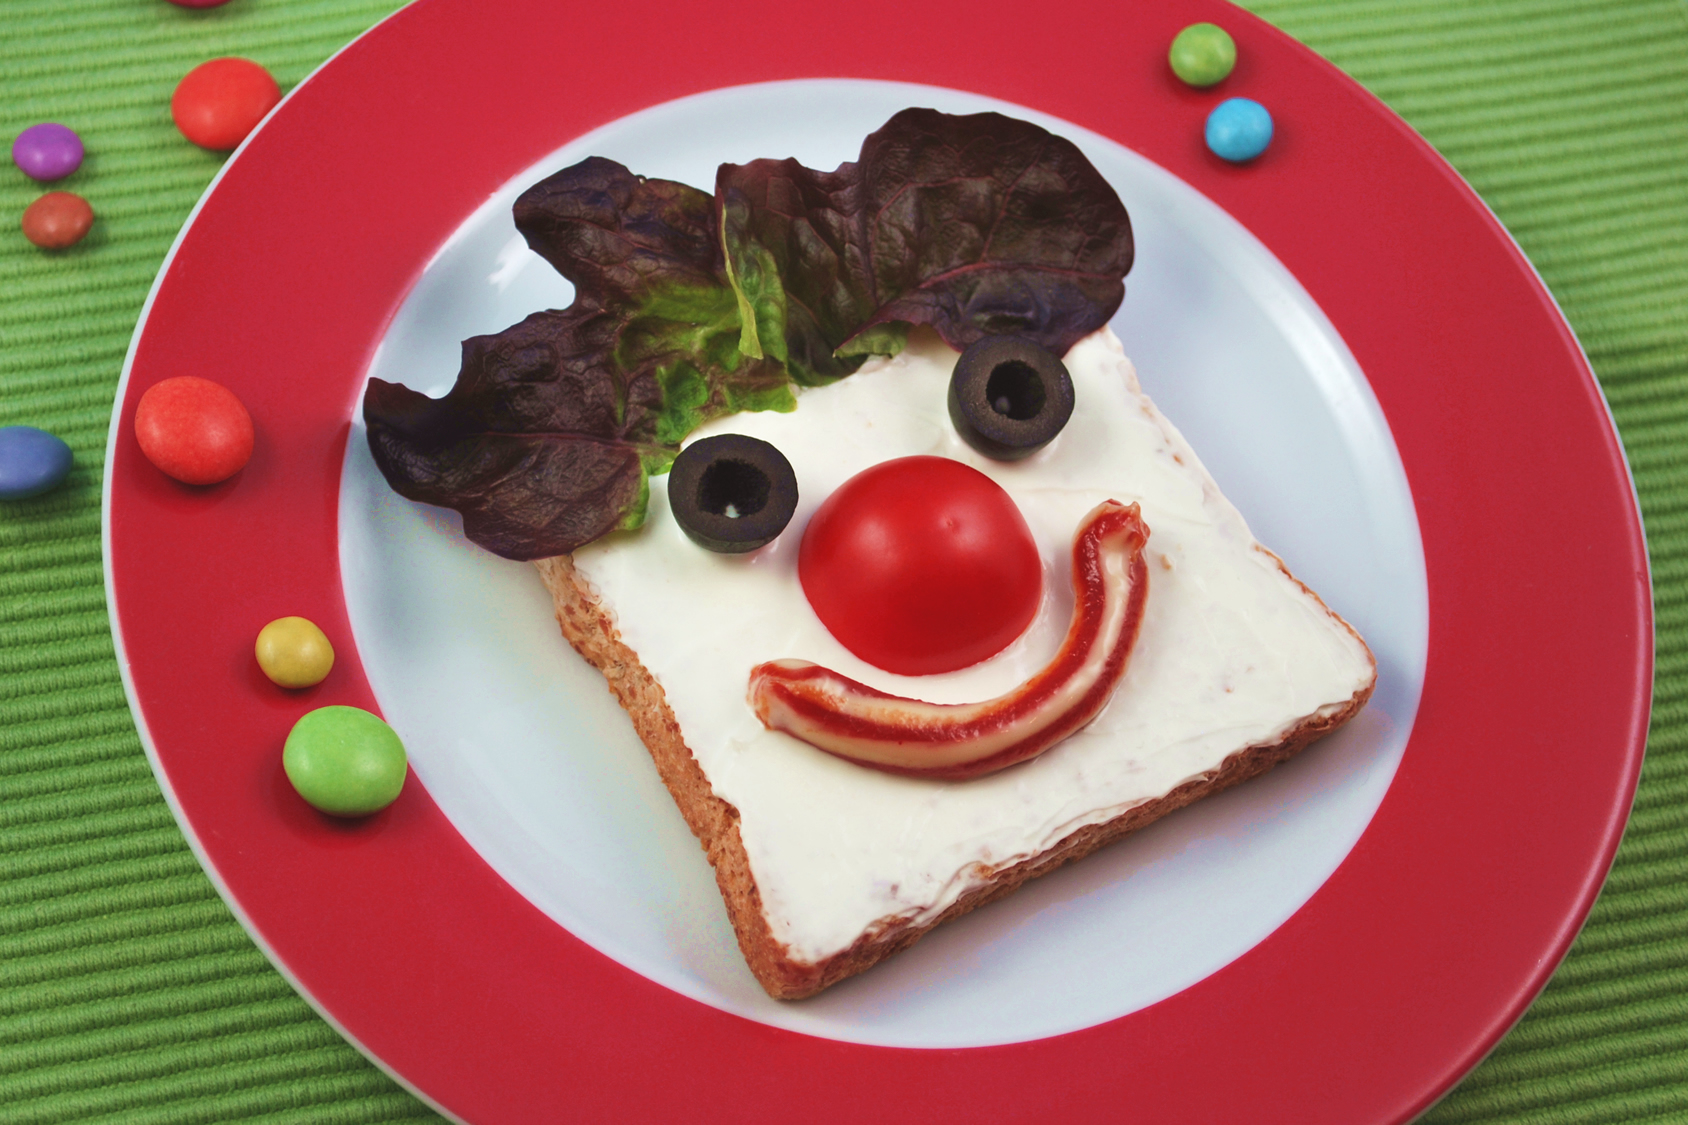 Gemüse-Gesichter - Kinderspiele-Welt.de